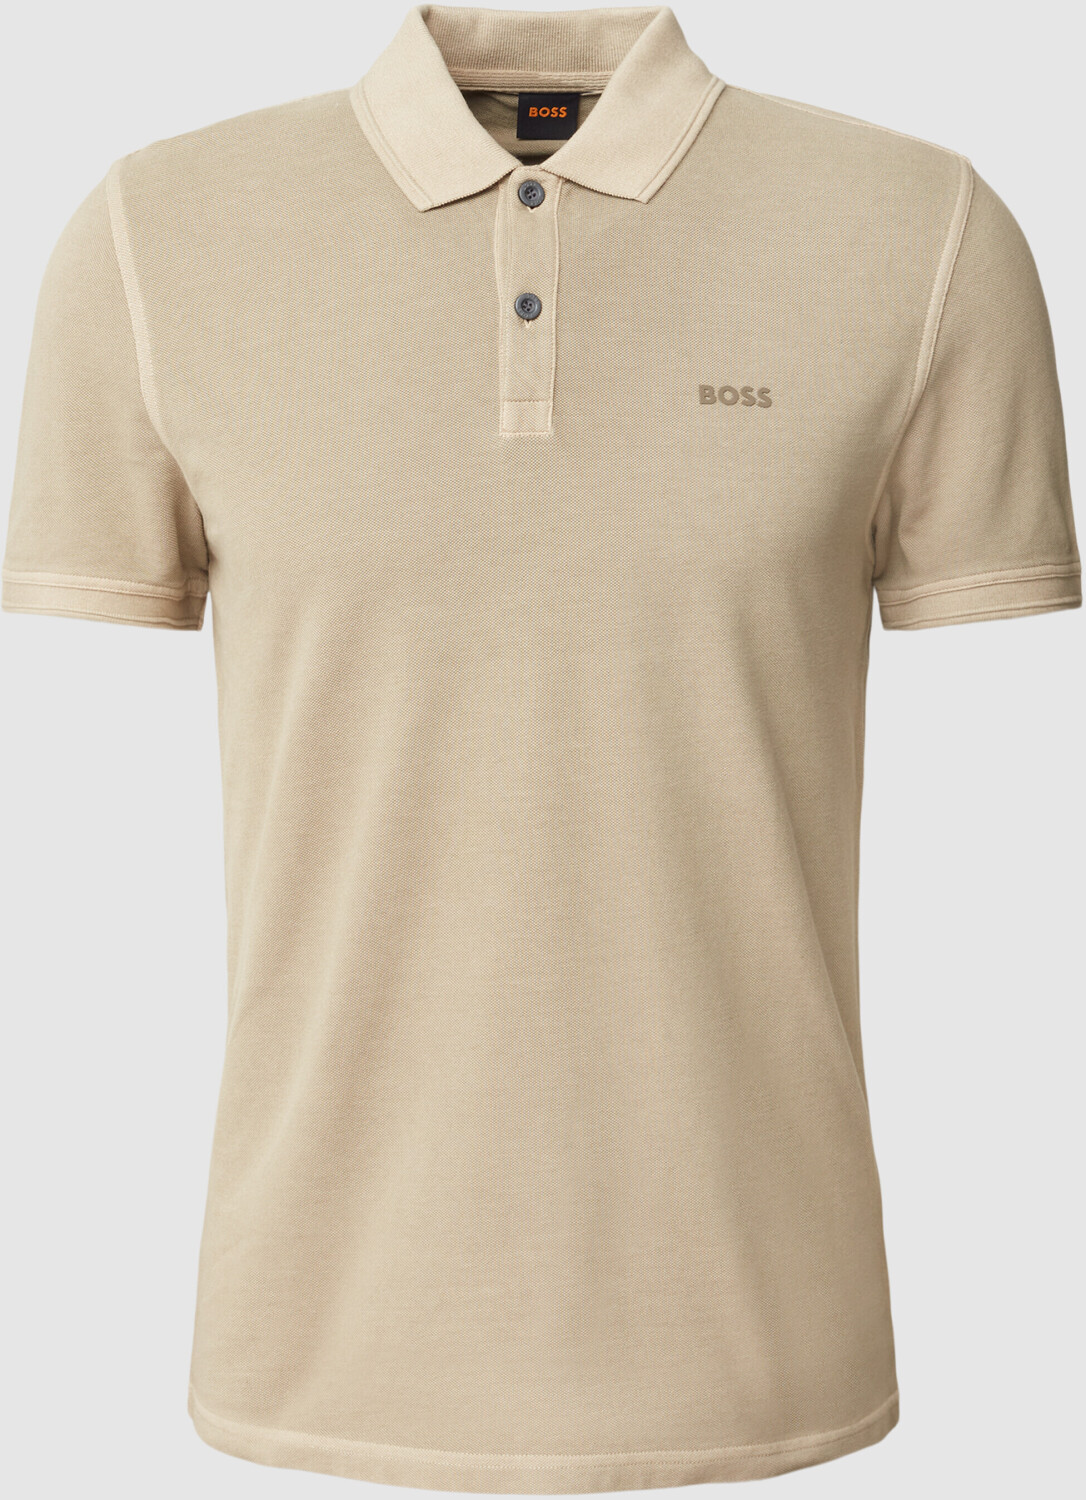 Hugo Boss Prime Slim-Fit Poloshirt (50468576-263) beige ab 56,00 € |  Preisvergleich bei